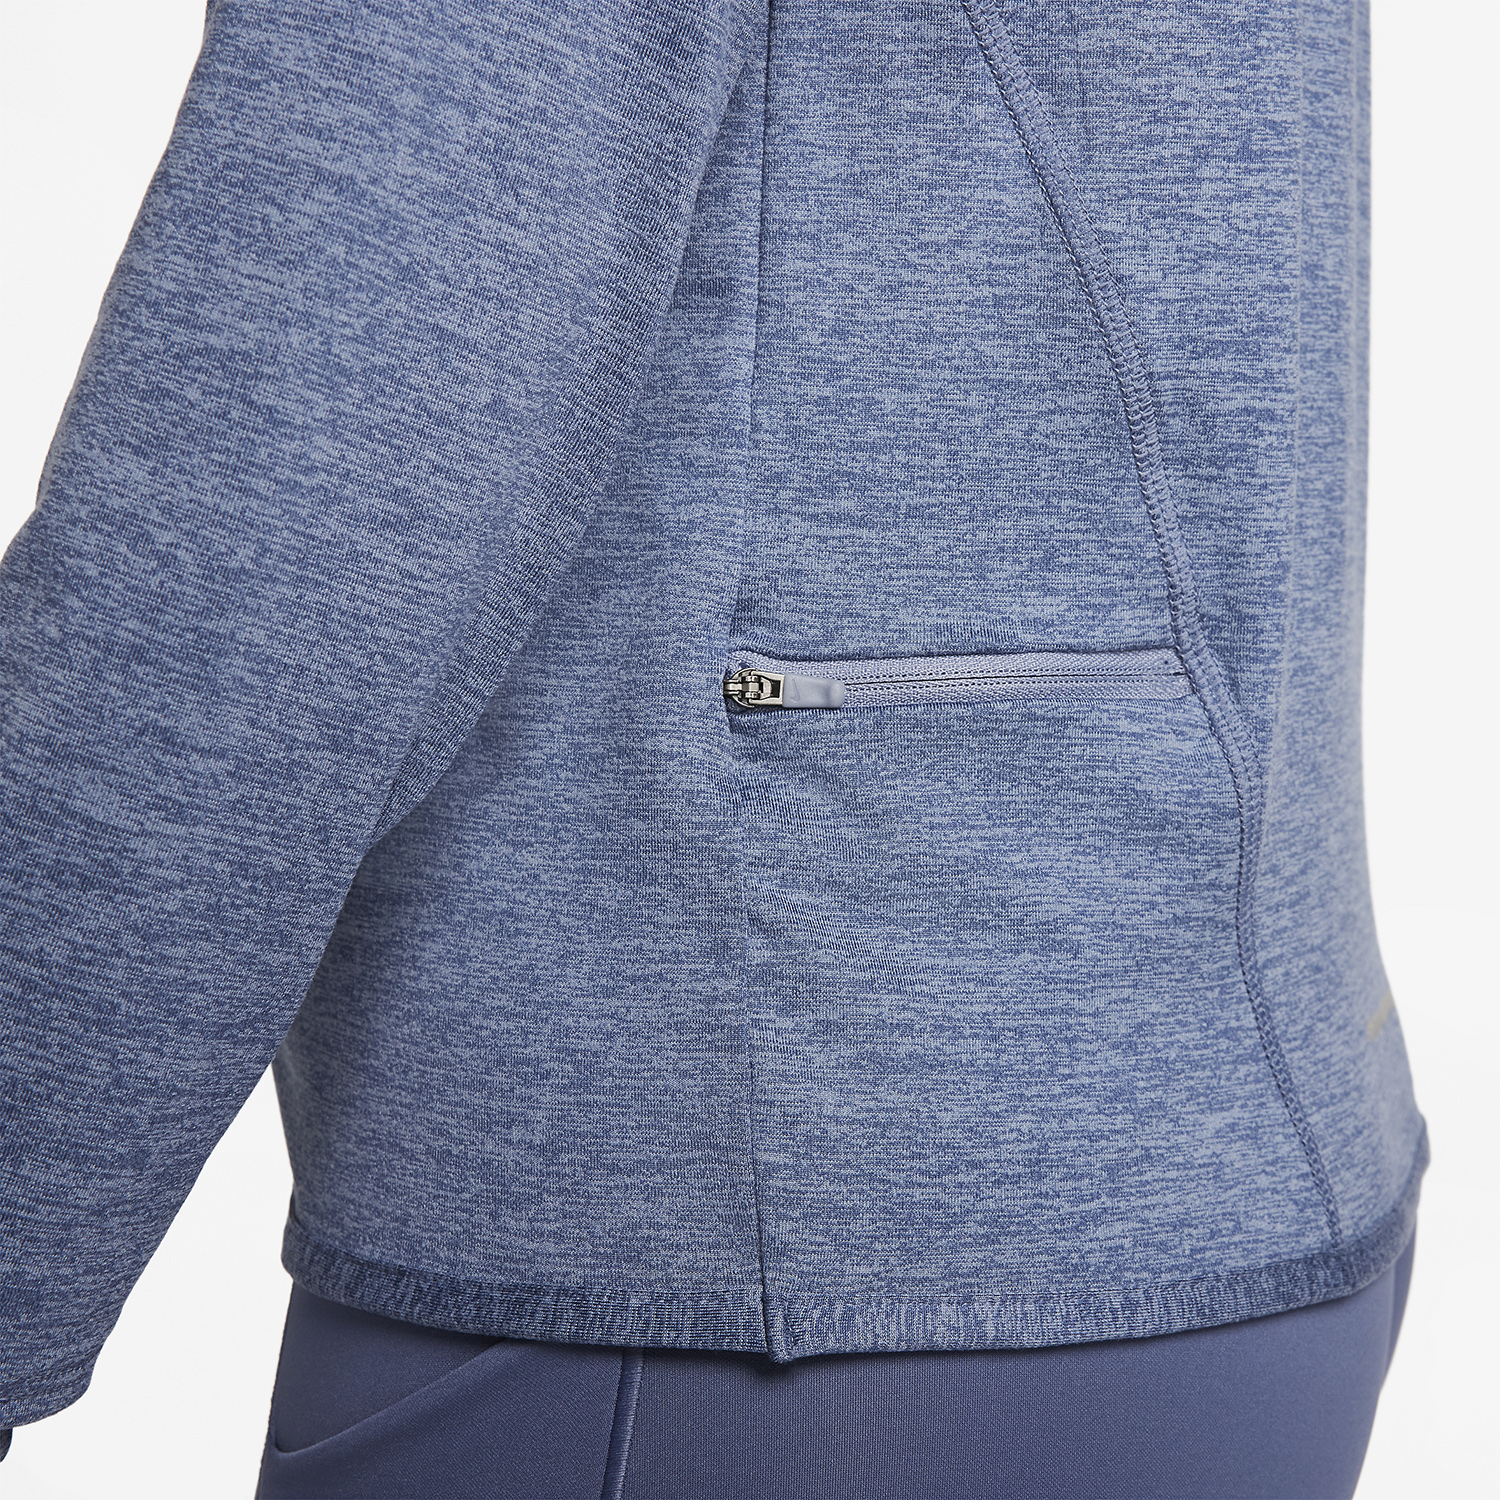 Nike Element Camisa - Ashen Slate/Reflective Silver